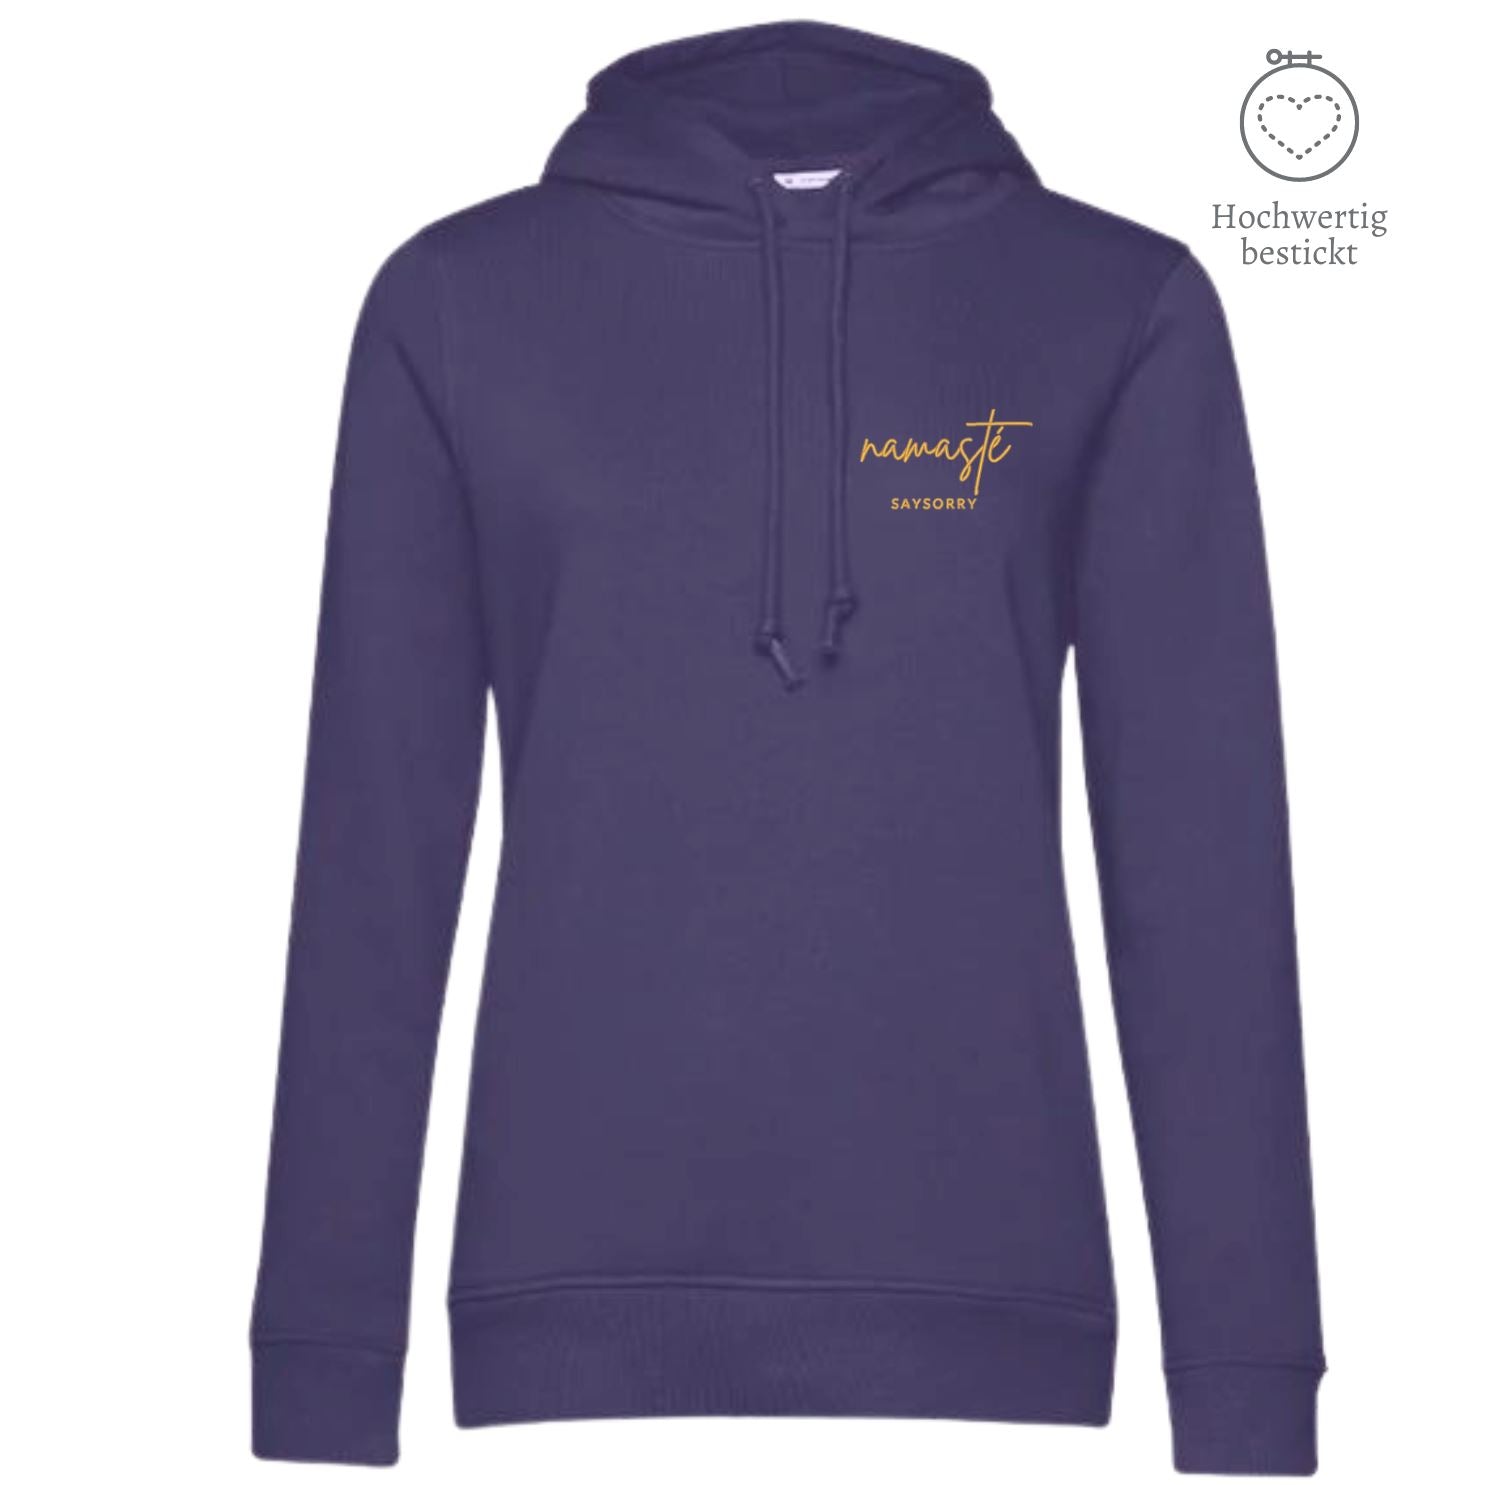 Organic & recycelter Damen Hoodie »Namasté in Gold« hochwertig bestickt Shirt SAYSORRY Radiant Purple XS 